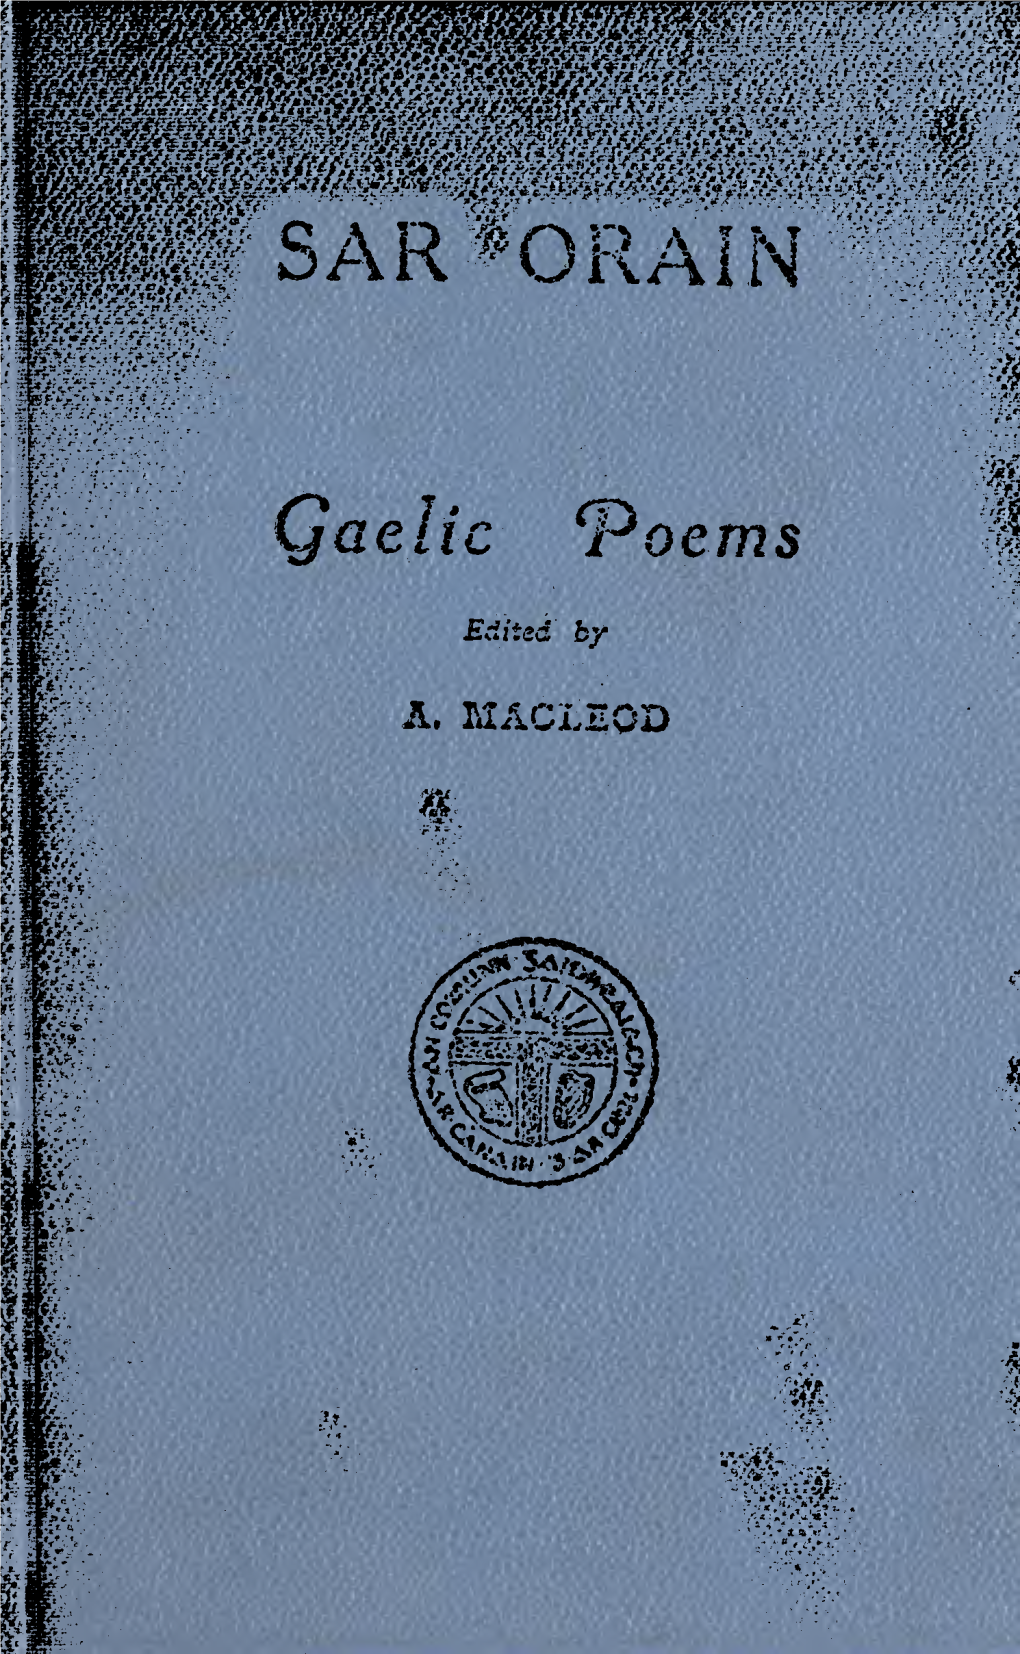 Poems Edited by A. MACLEOD U-1^